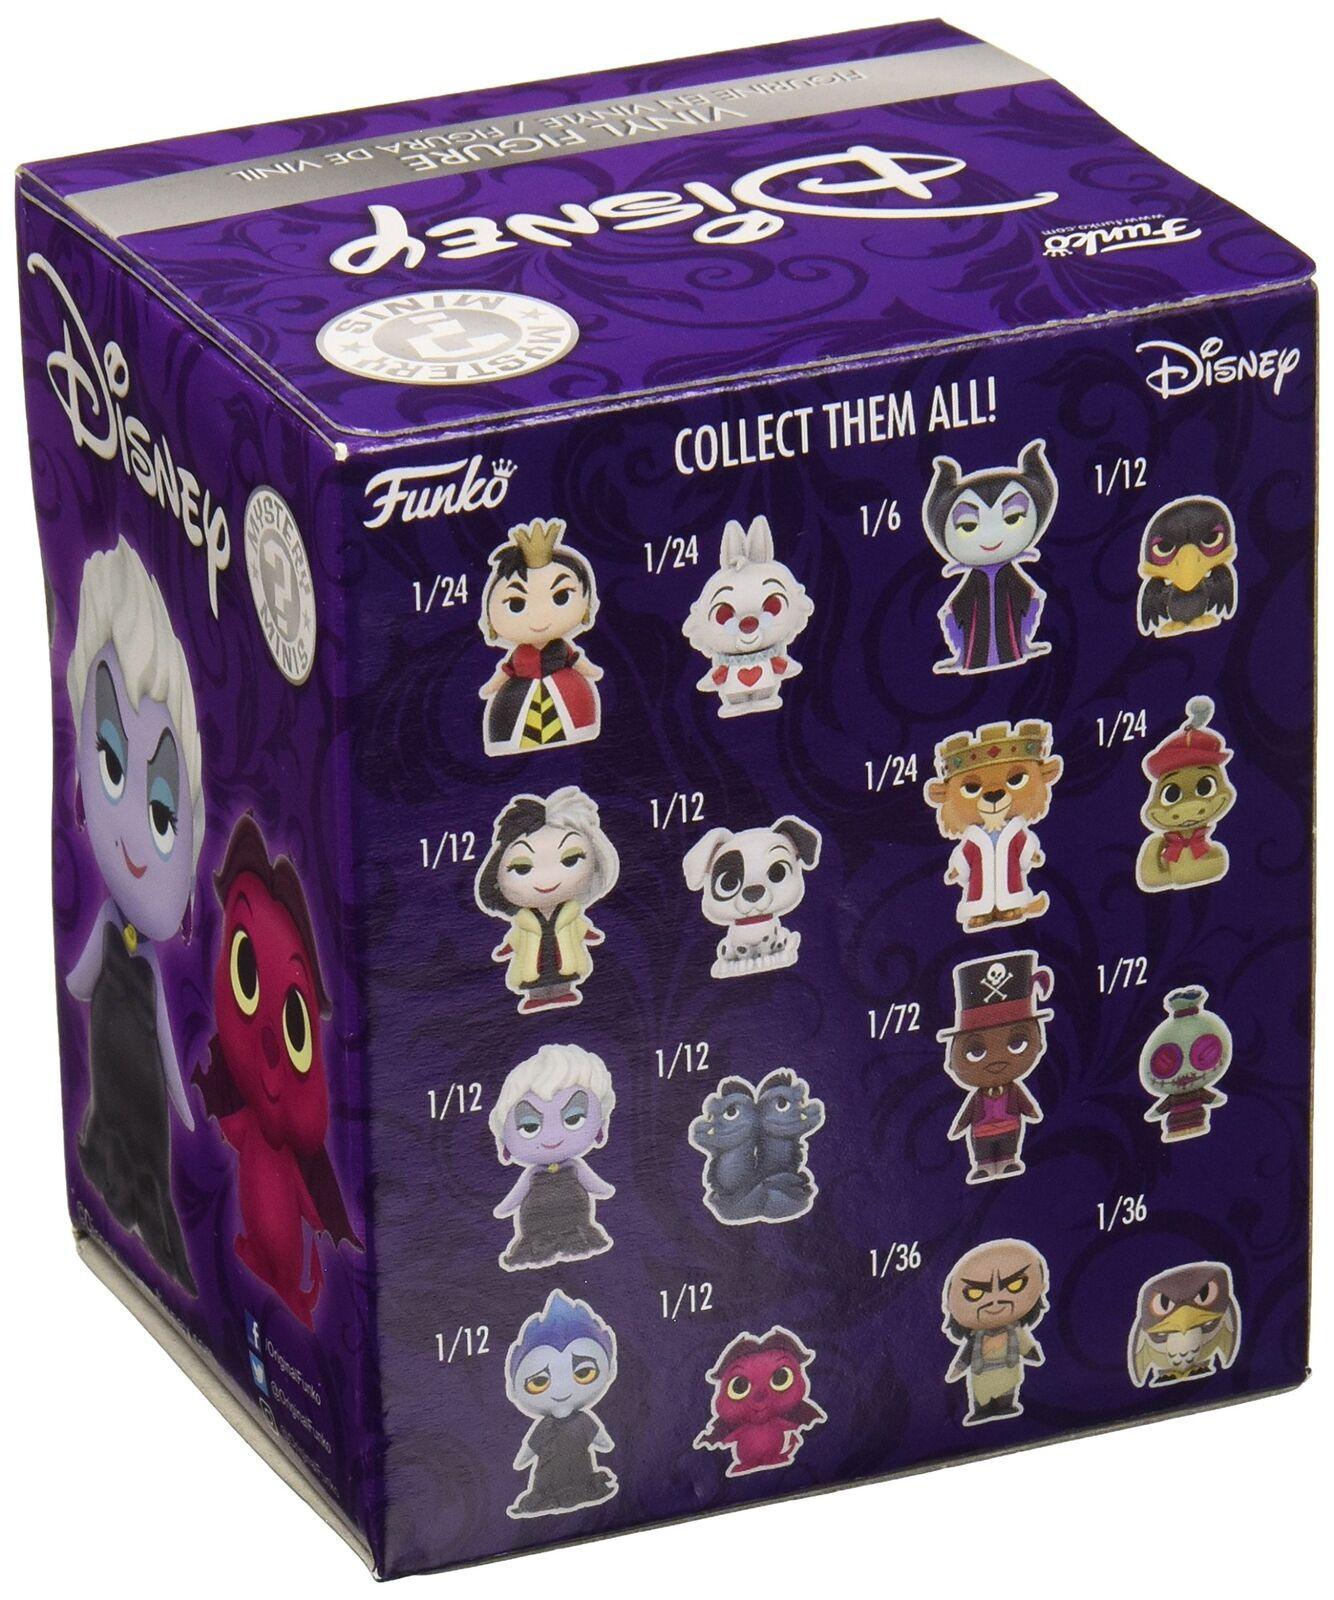 Mystery Minis blind box Disney Villains - DISNEY - Magic Dreams Store